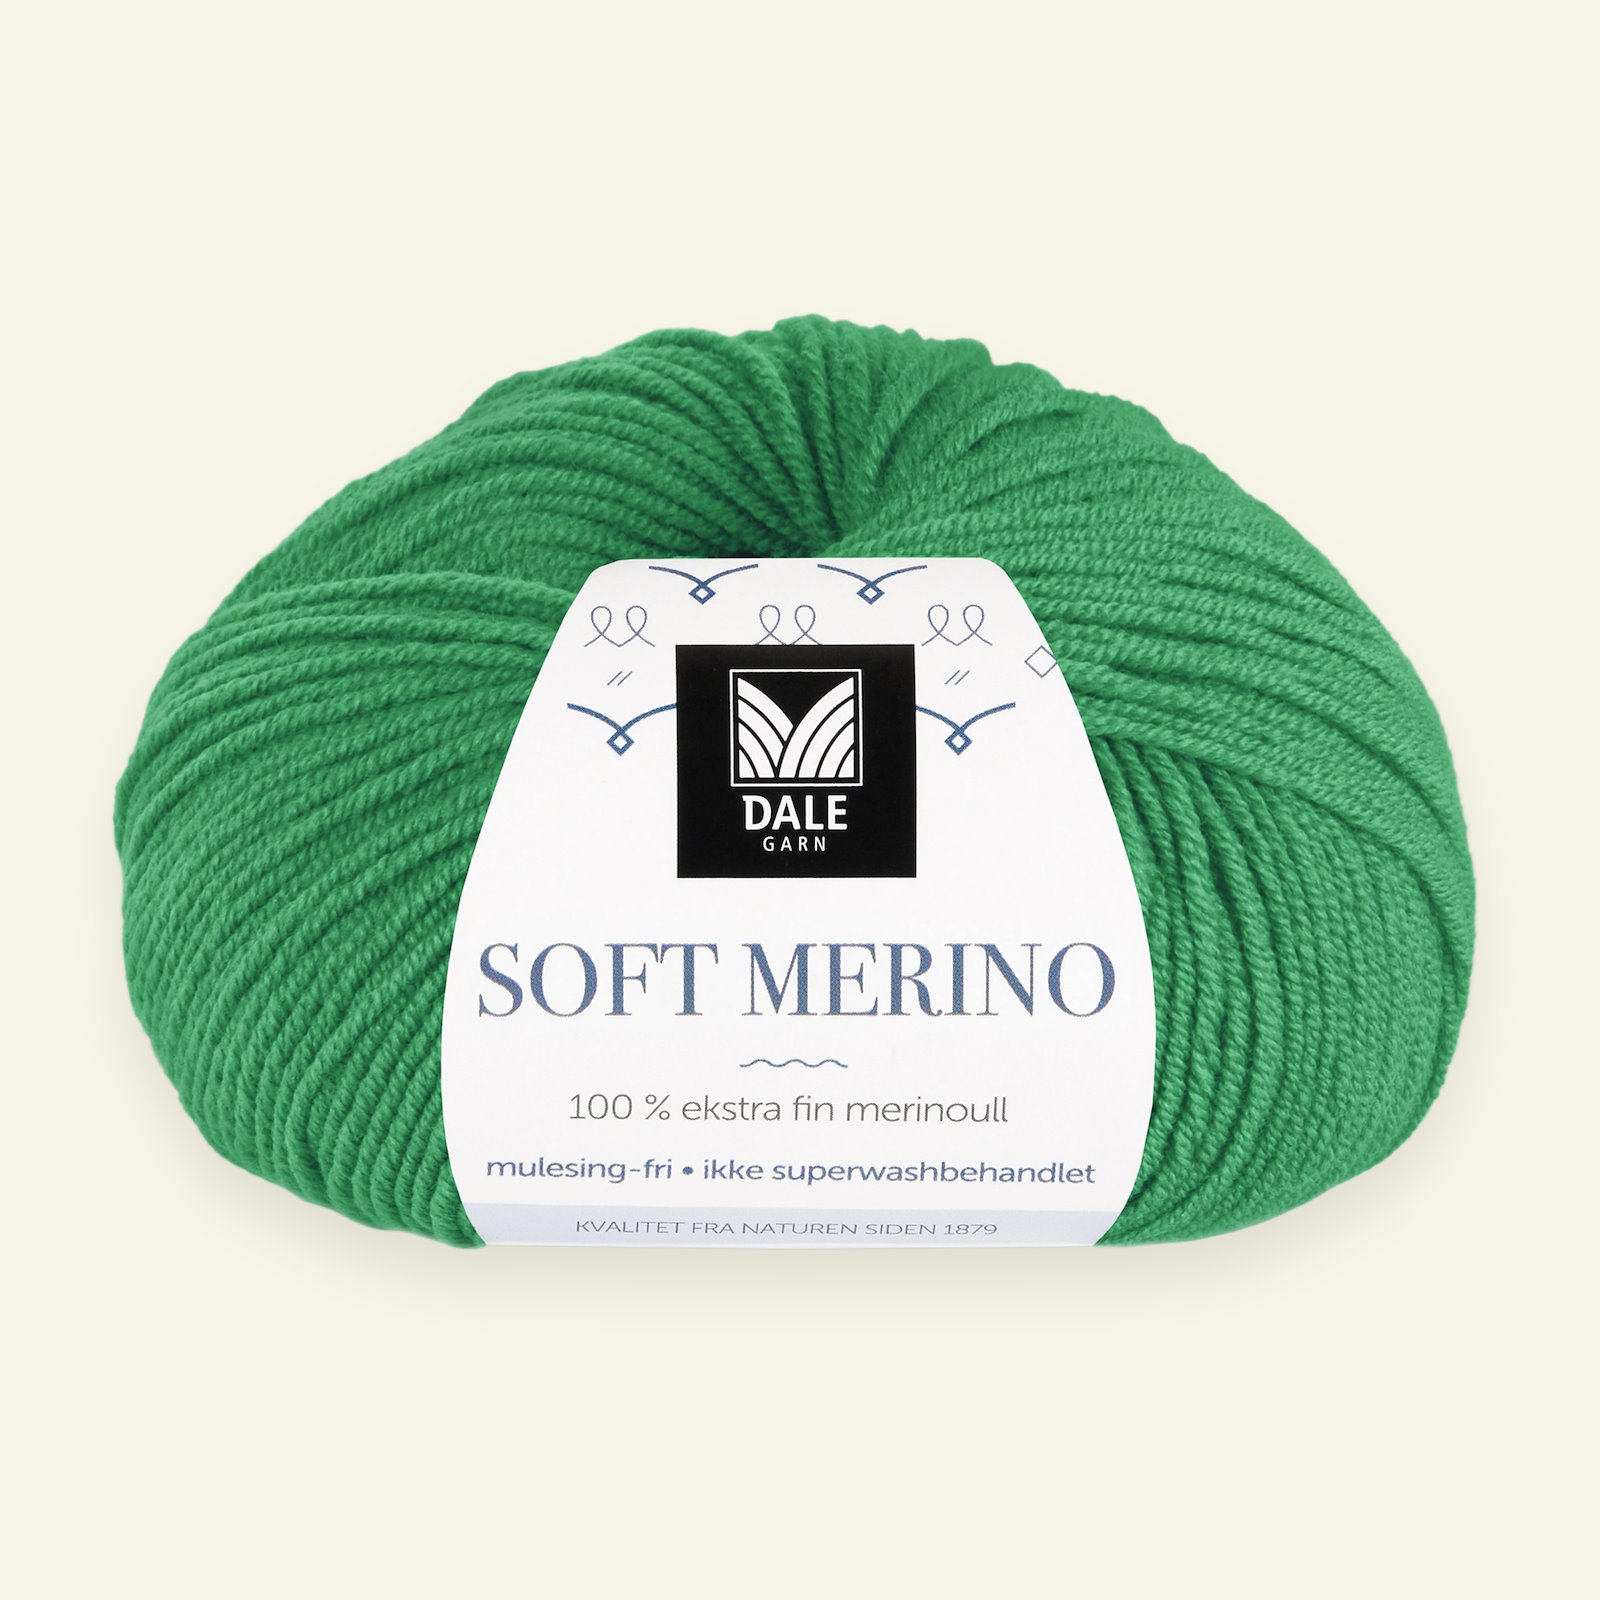 Dale Garn, 100% extra fine merino wool yarn, Soft Merino, green (3030)